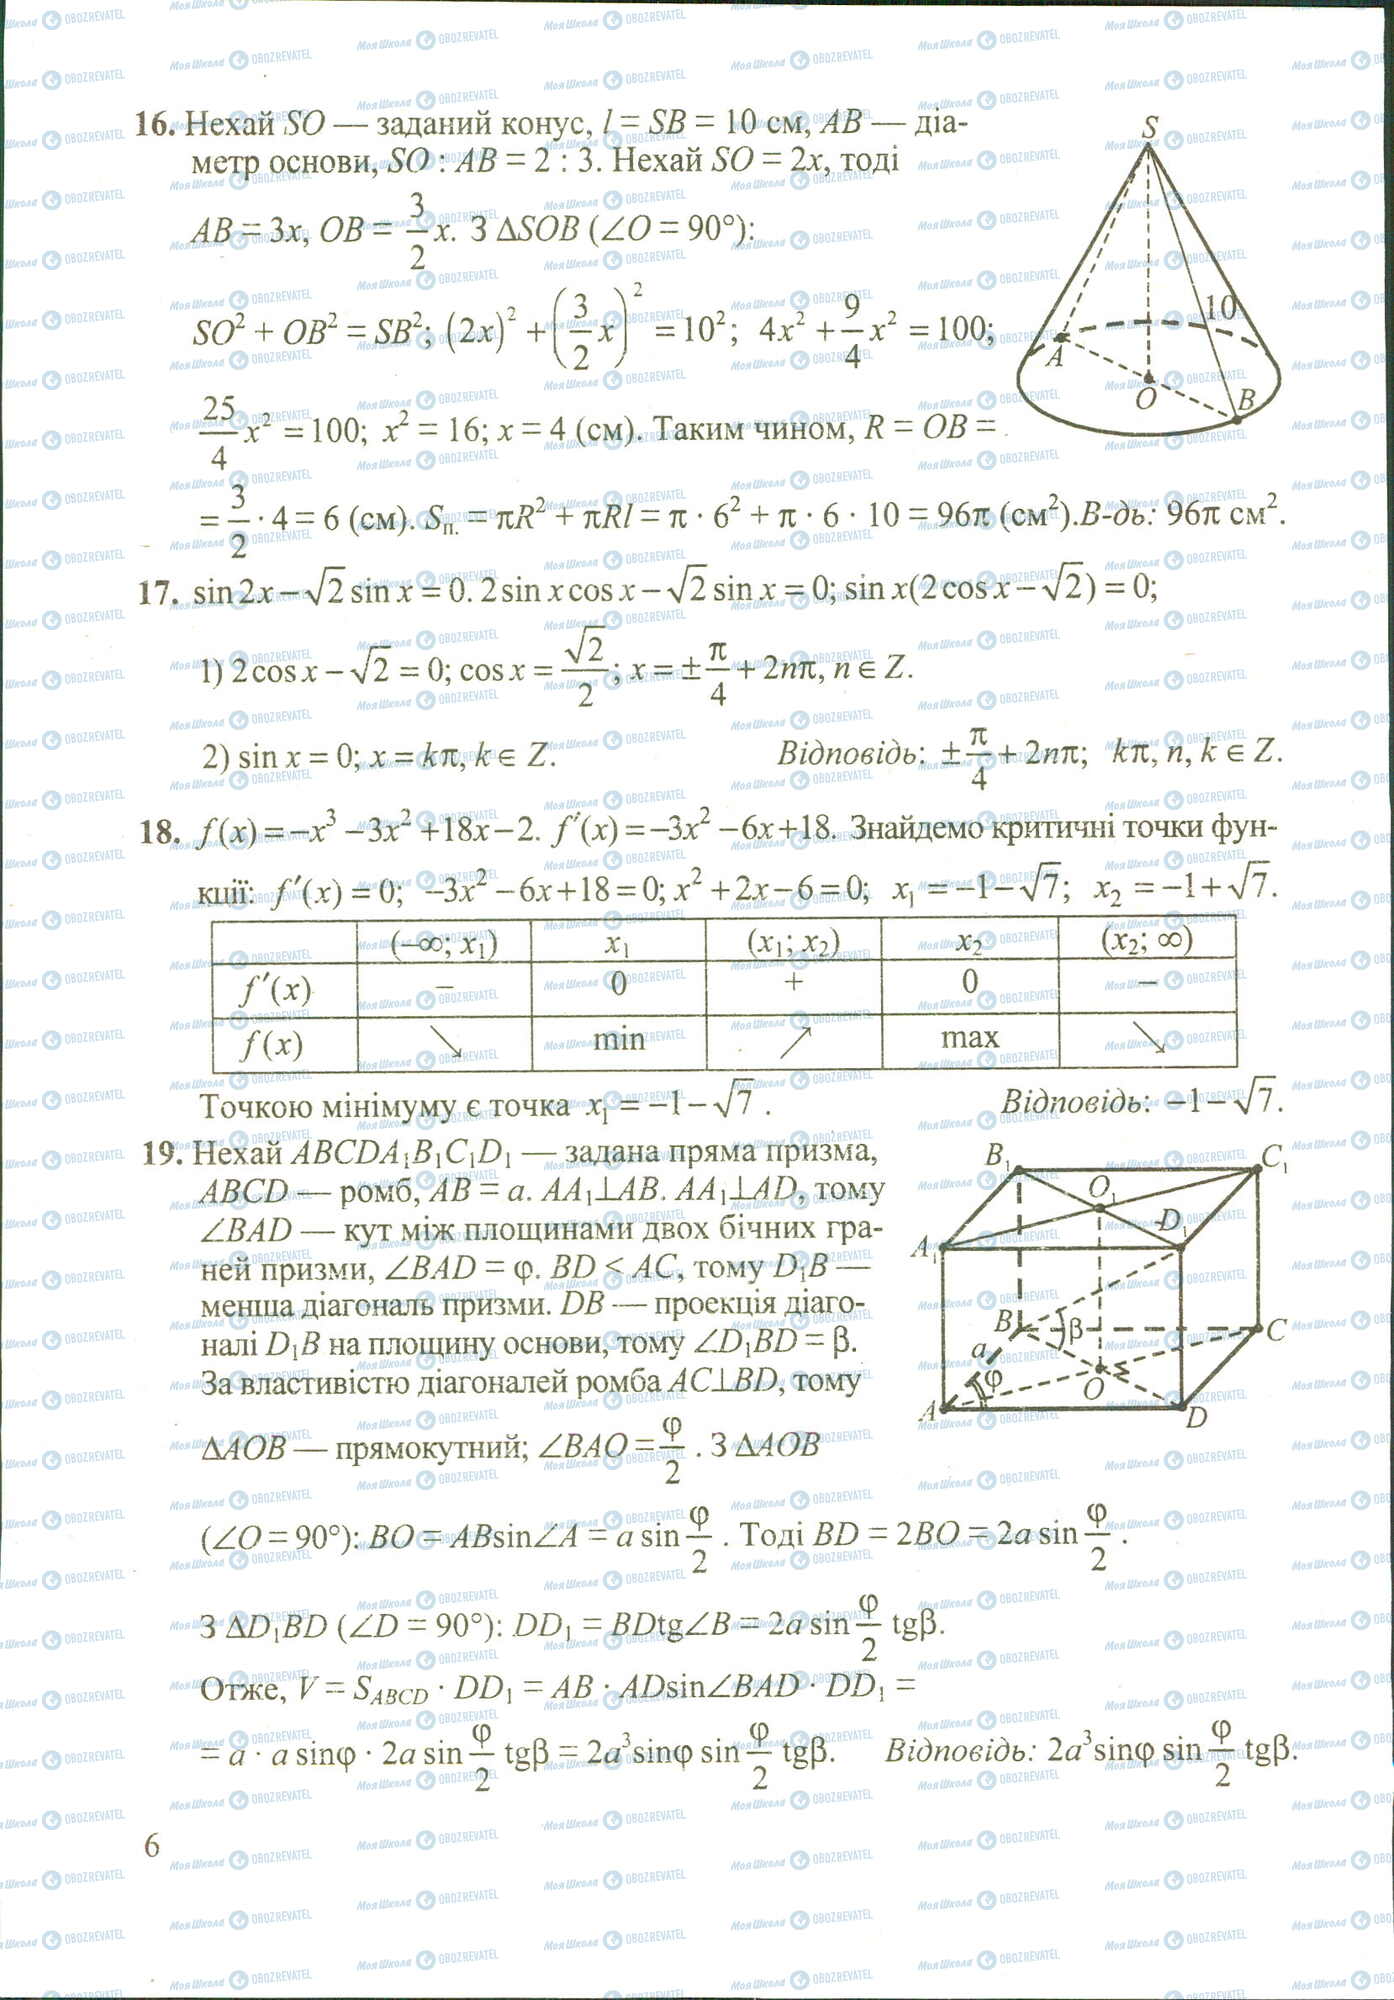 ДПА Математика 11 класс страница image0000002B